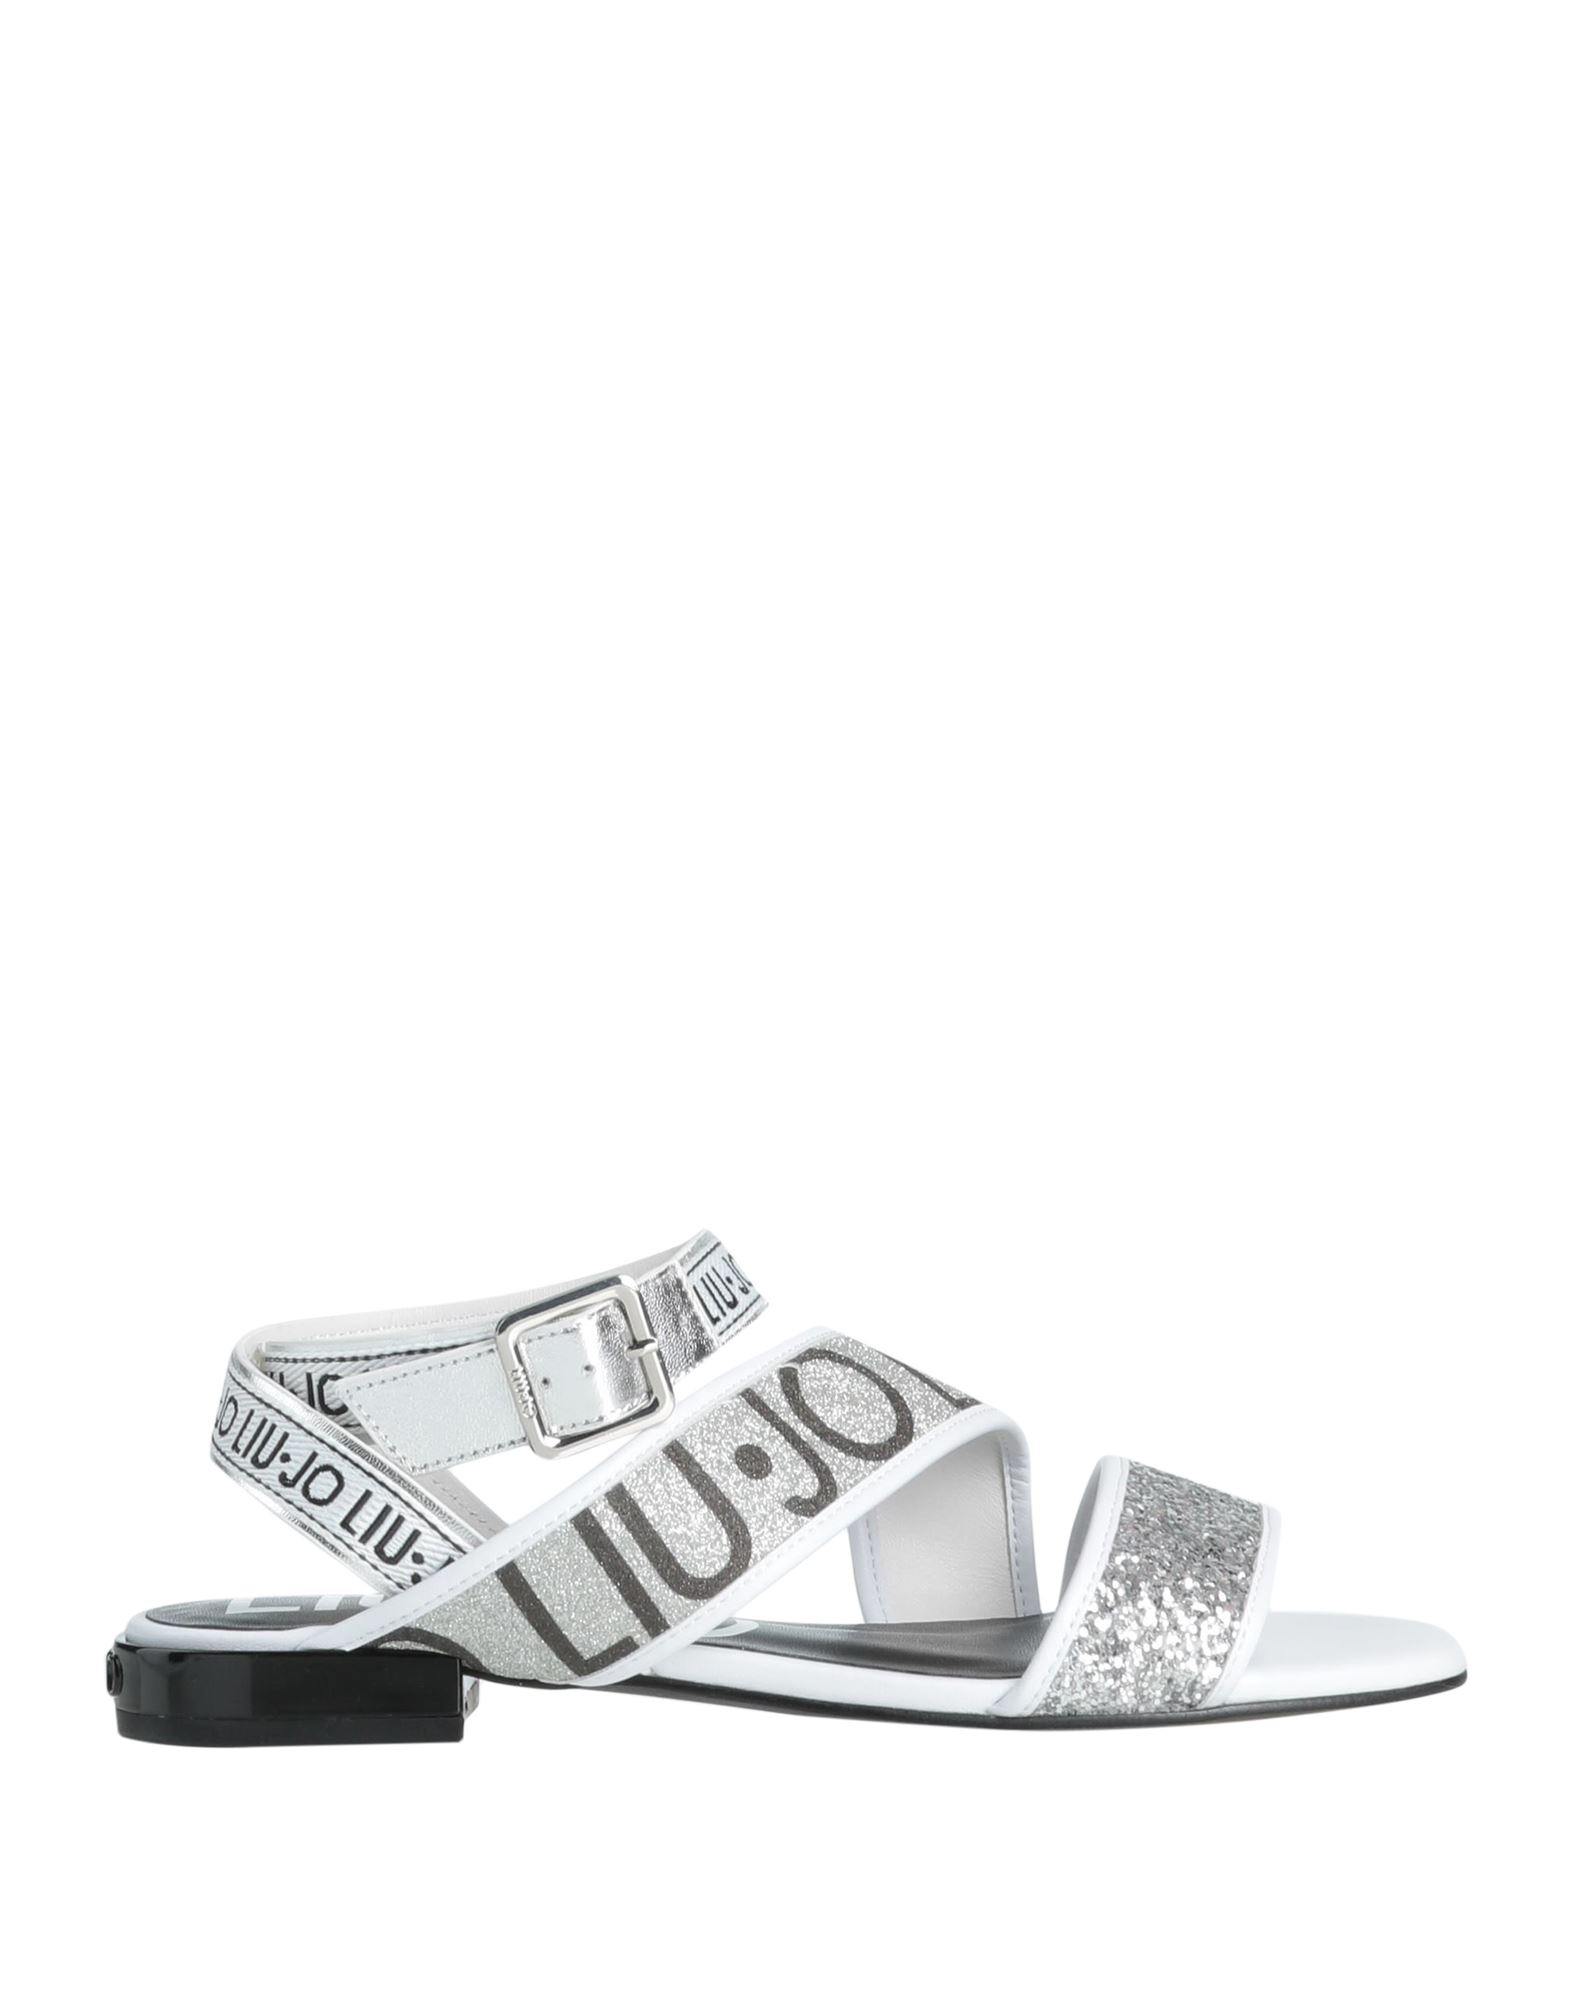 Liu •jo Sandals In Silver